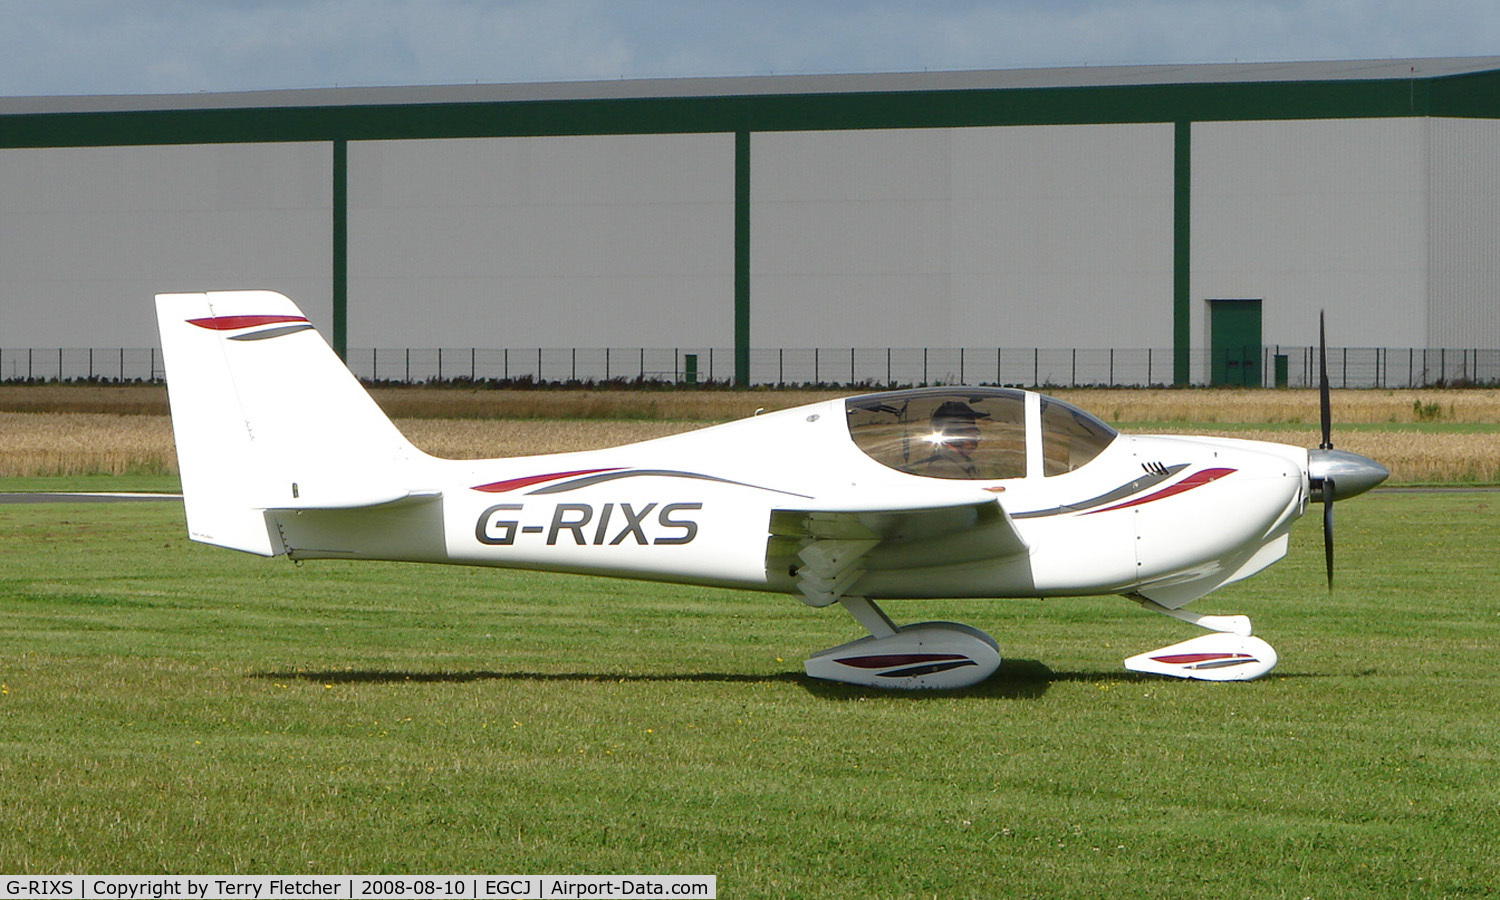 G-RIXS, 2003 Europa XS Tri-Gear C/N PFA 247-13822, Visitor to the 2008 LAA Regional Fly-in at Sherburn